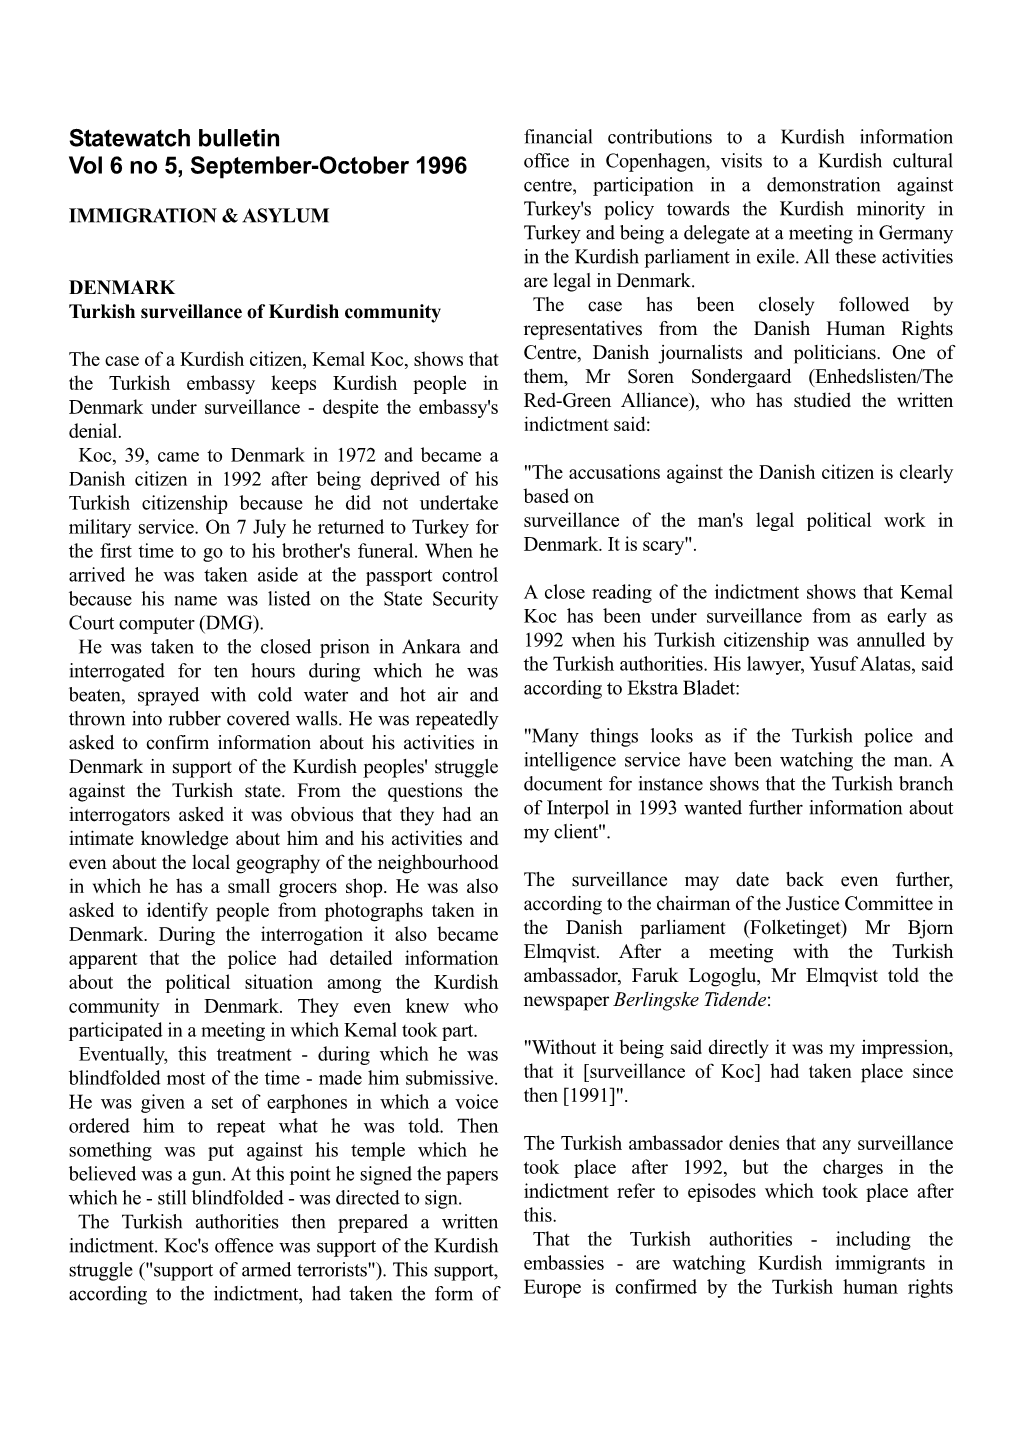 Statewatch Bulletin Vol 6 No 5, September-October 1996